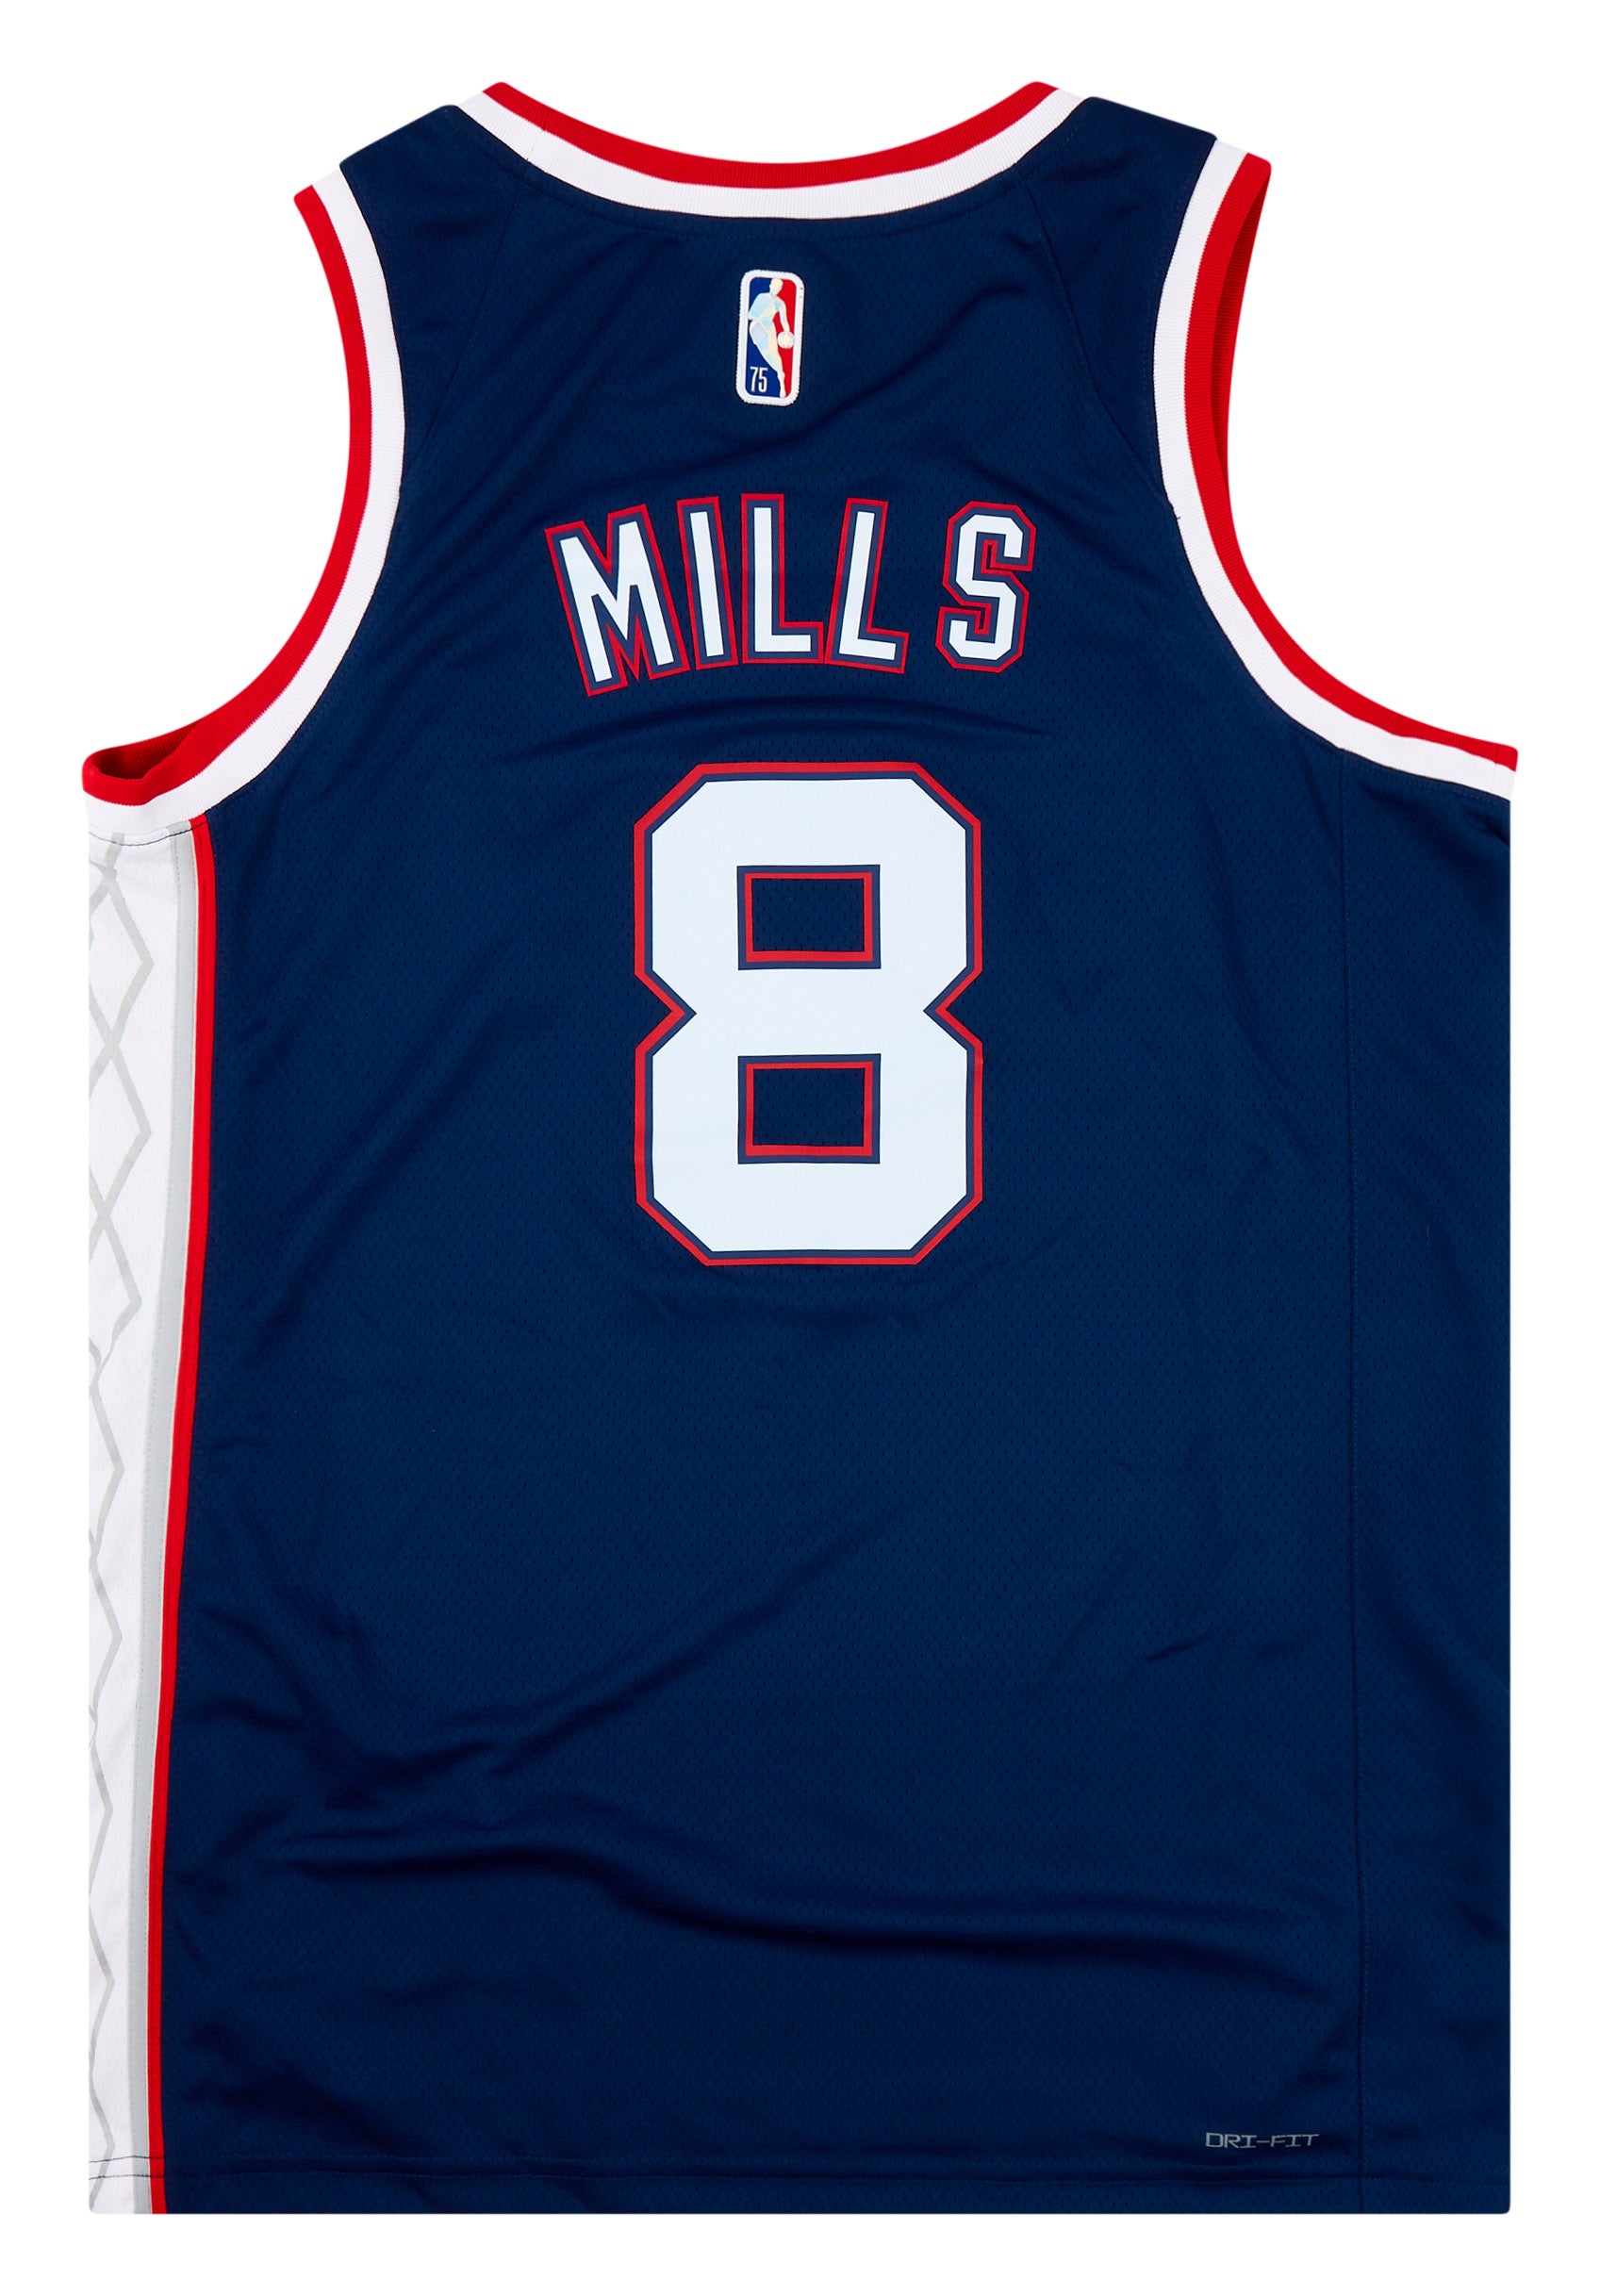 mills nets jersey